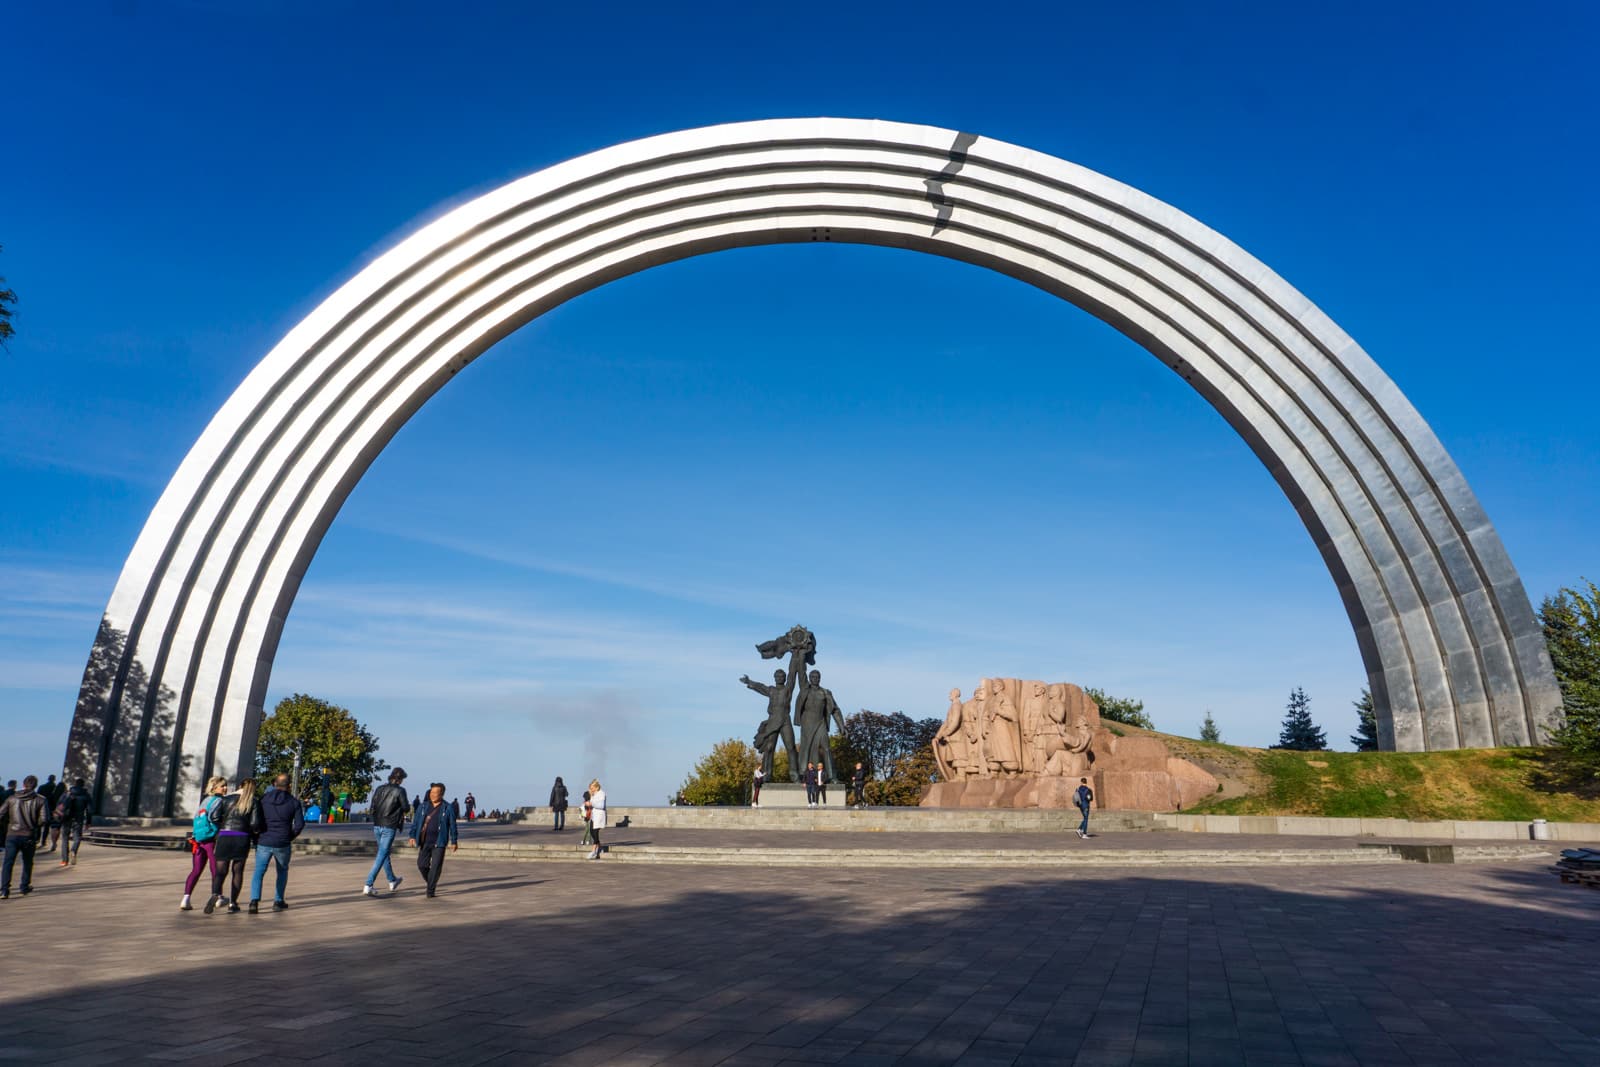 Friendship of Nations arch in Kyiv, Ukraine